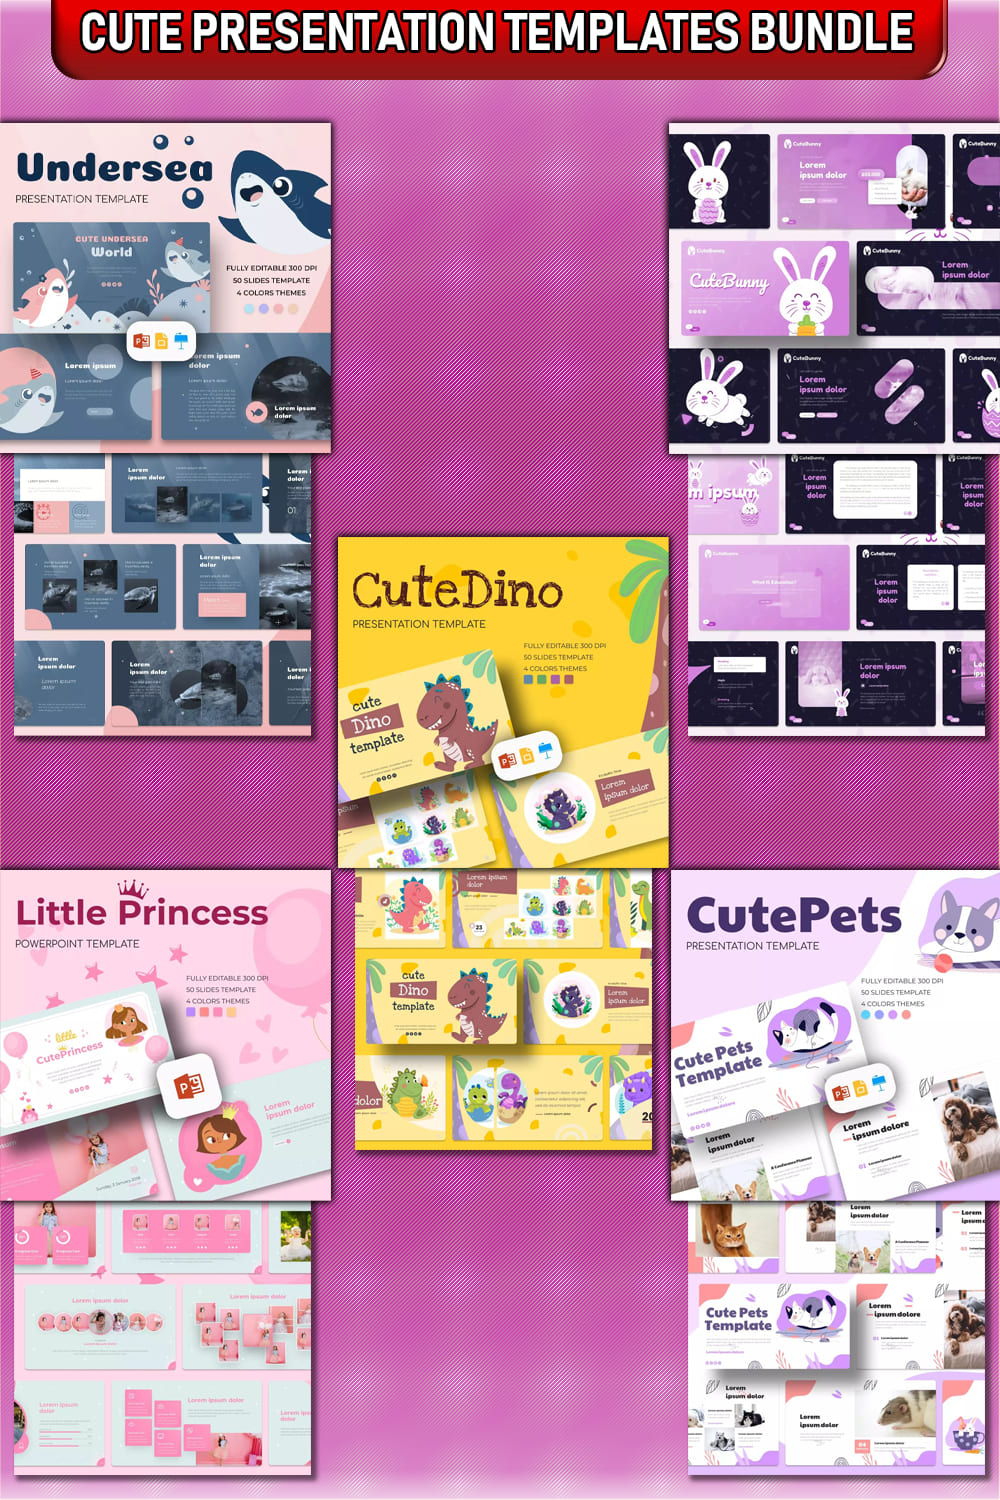 Cute Presentation Templates Bundle - Pinterest.